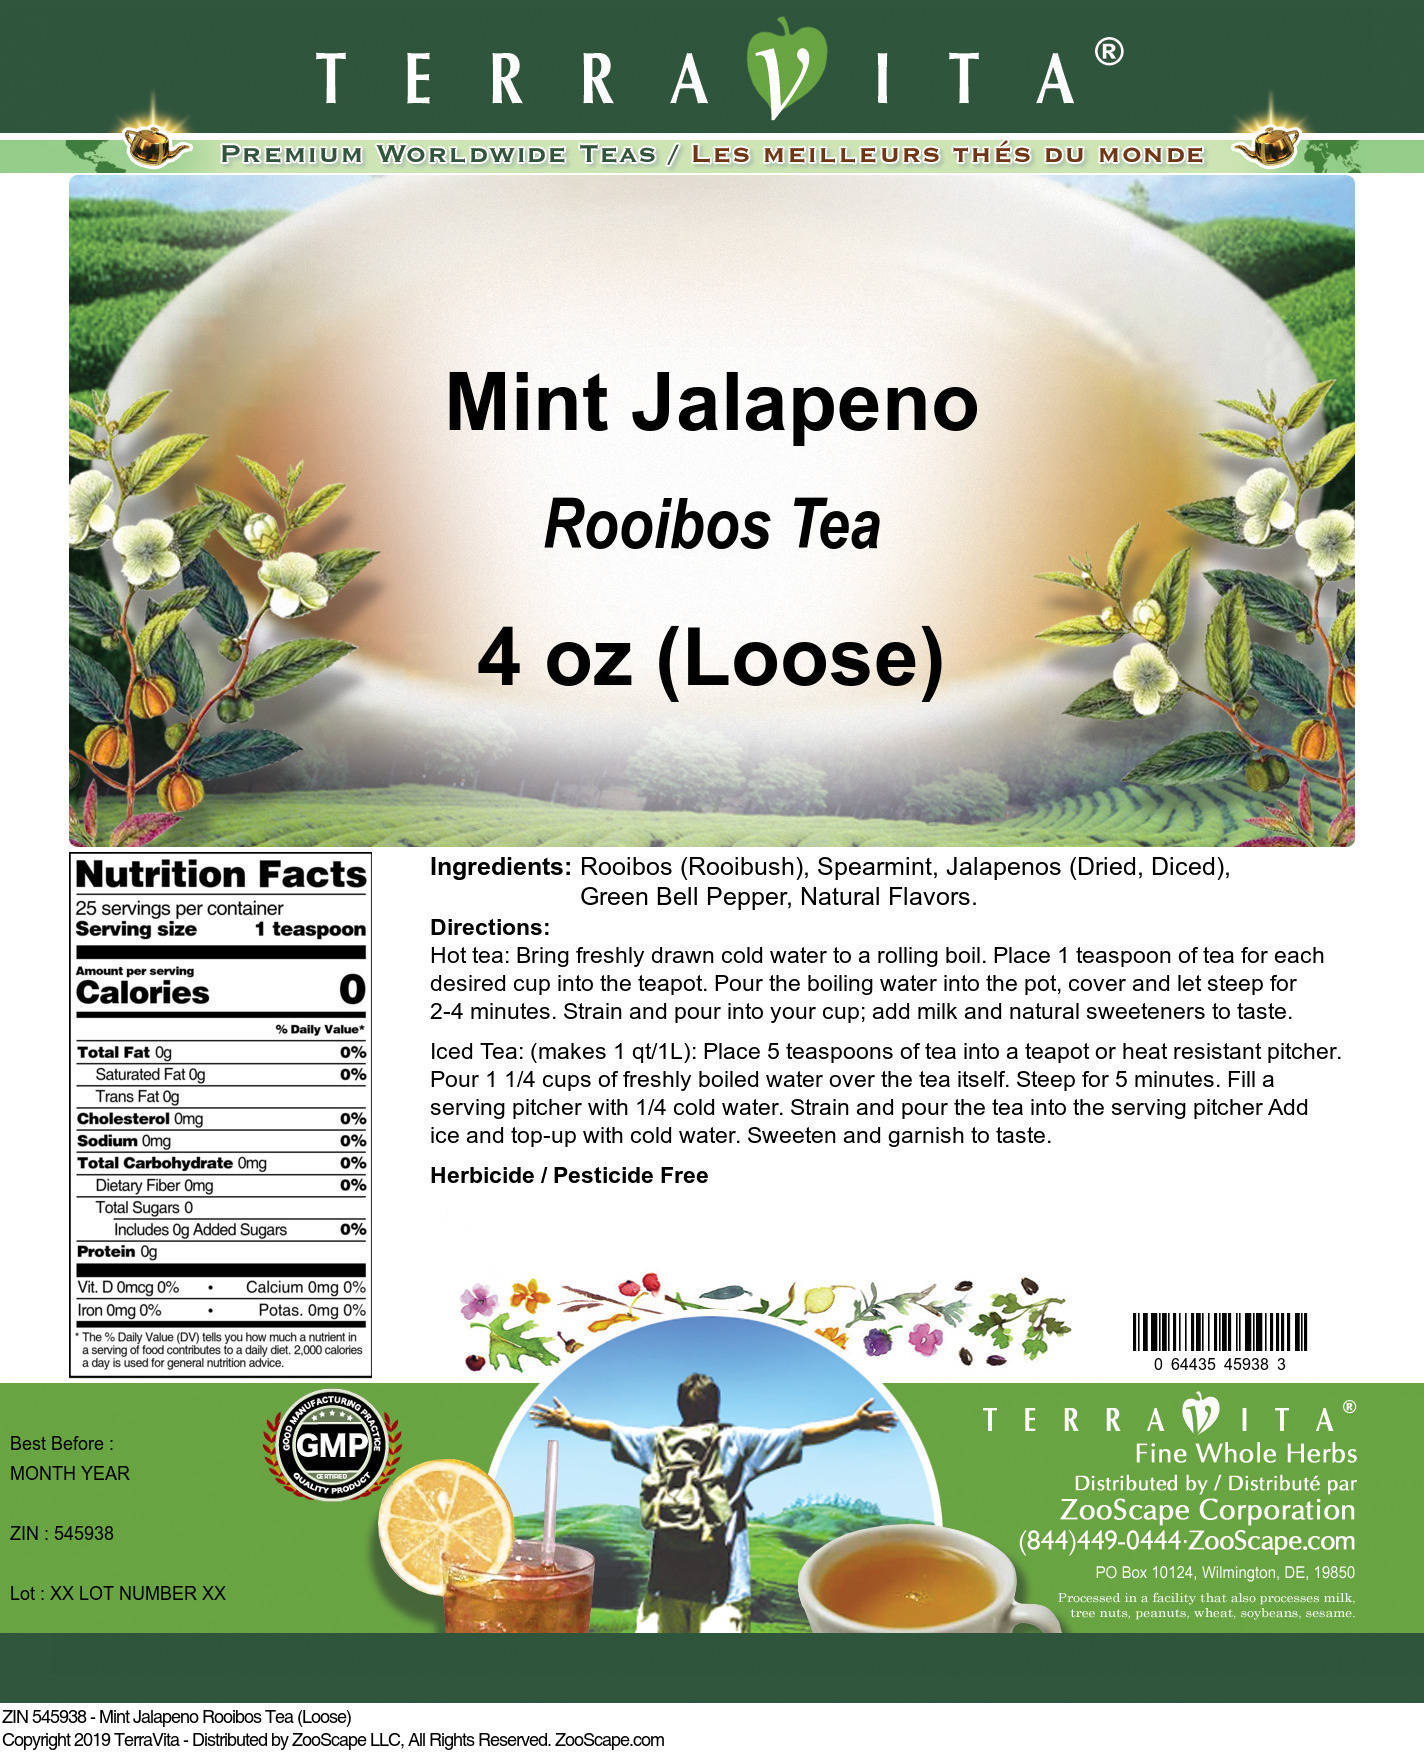 Mint Jalapeno Rooibos Tea (Loose) - Label